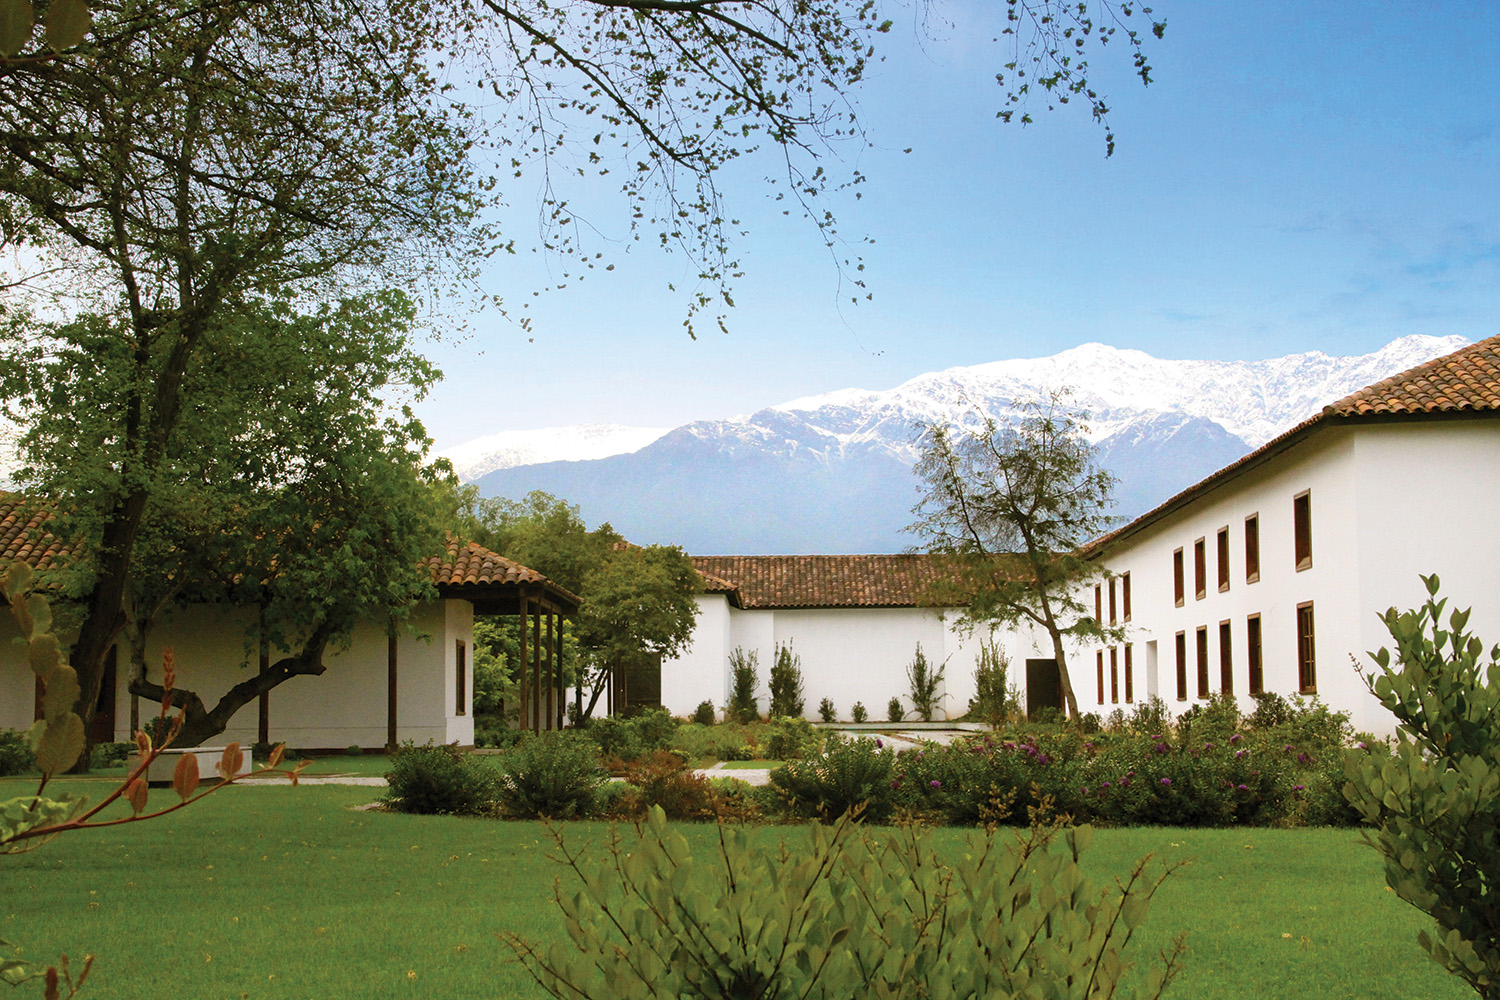 Santa Carolina's Santiago winery with a backdrop of the Andes